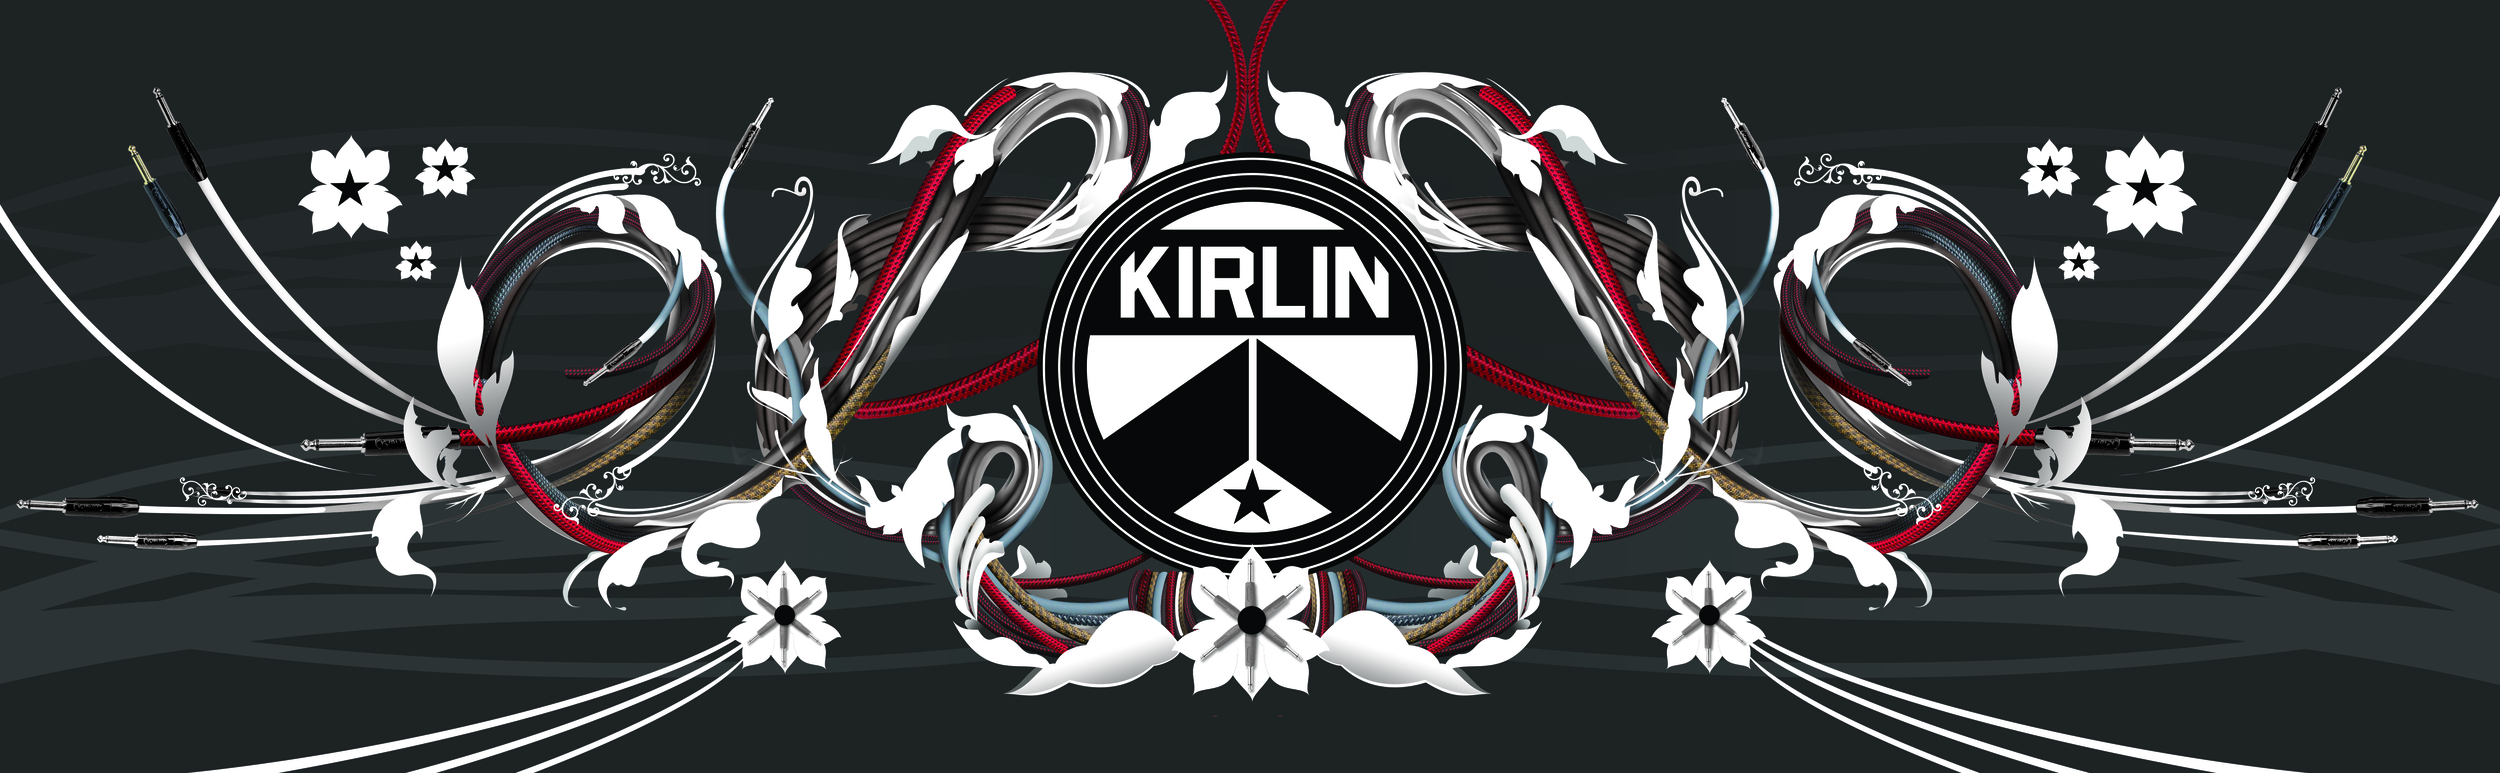 Kirlin_FinalResize copy 2.jpg